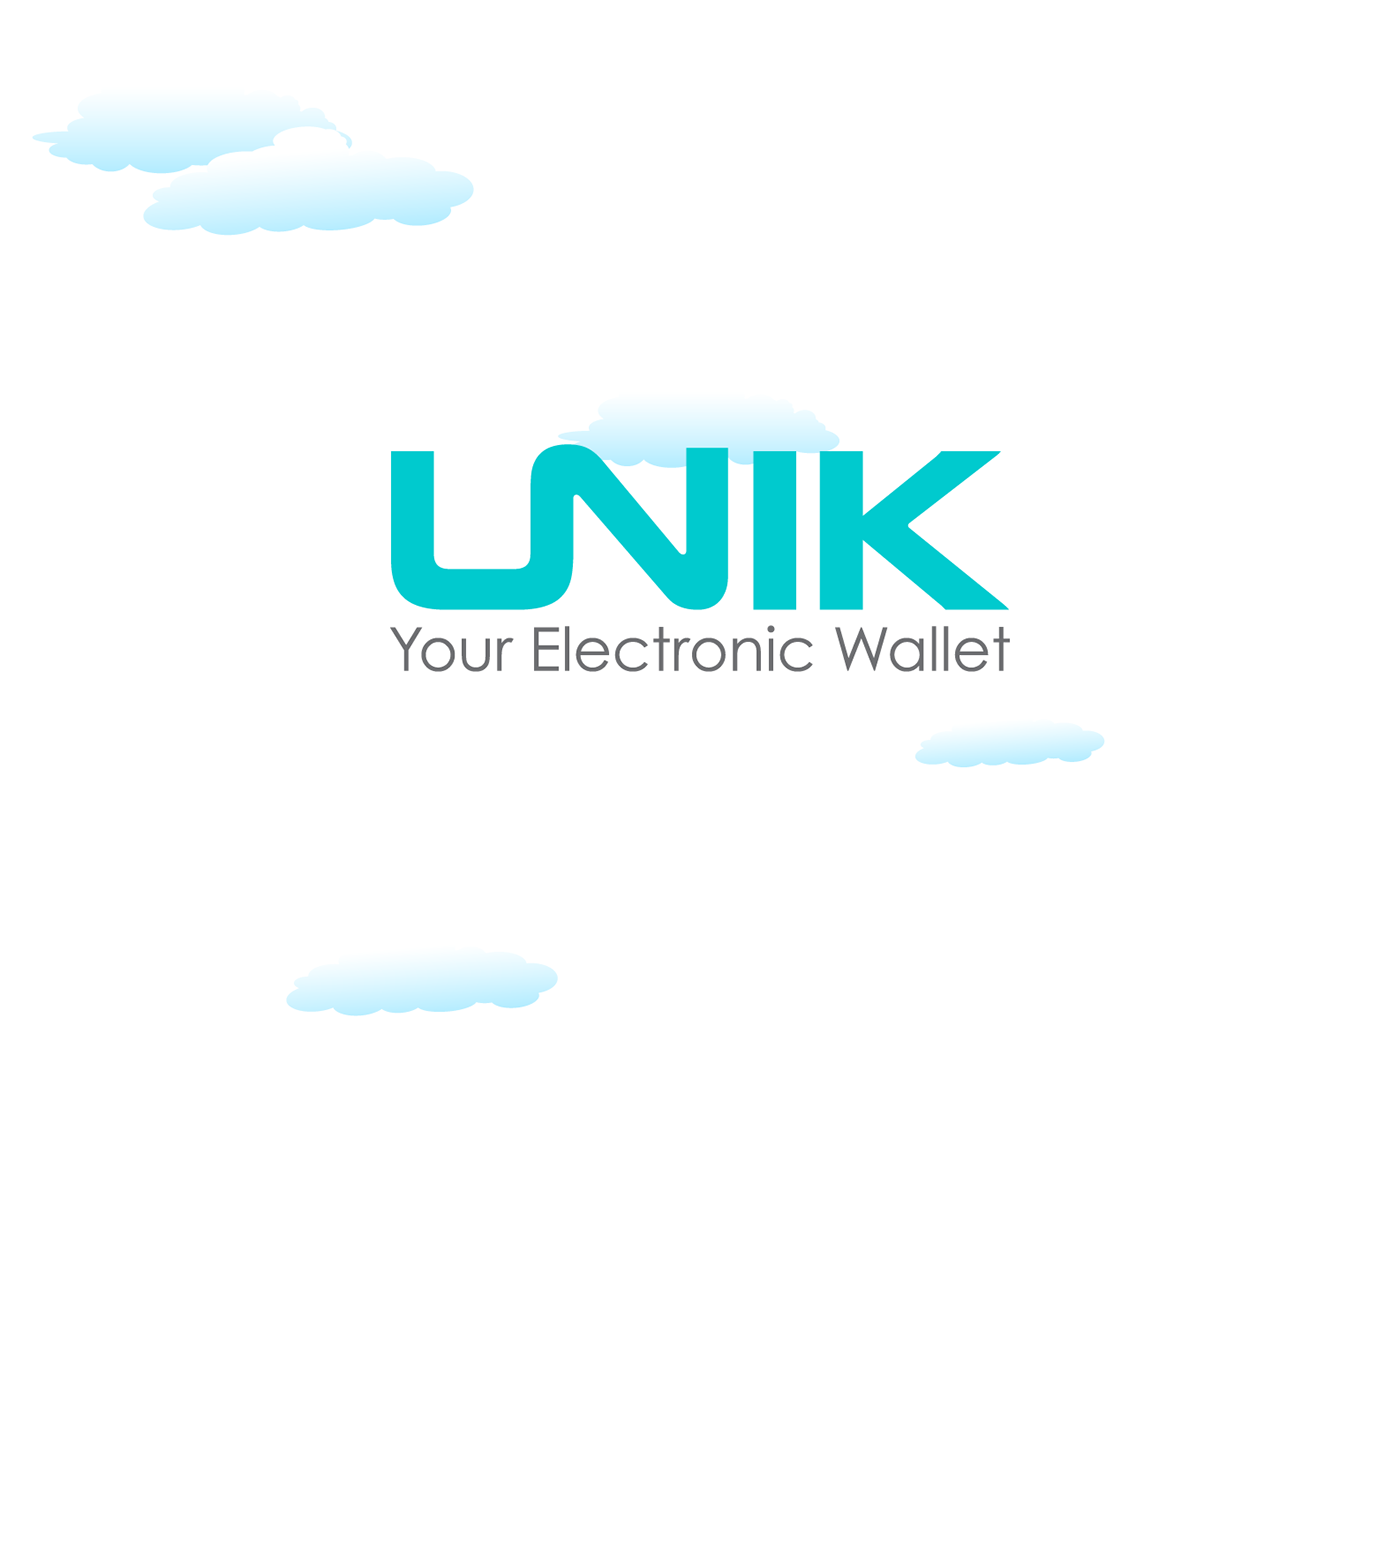 design ux/ui Mobile apps mobile banking social banking mobile wallet application